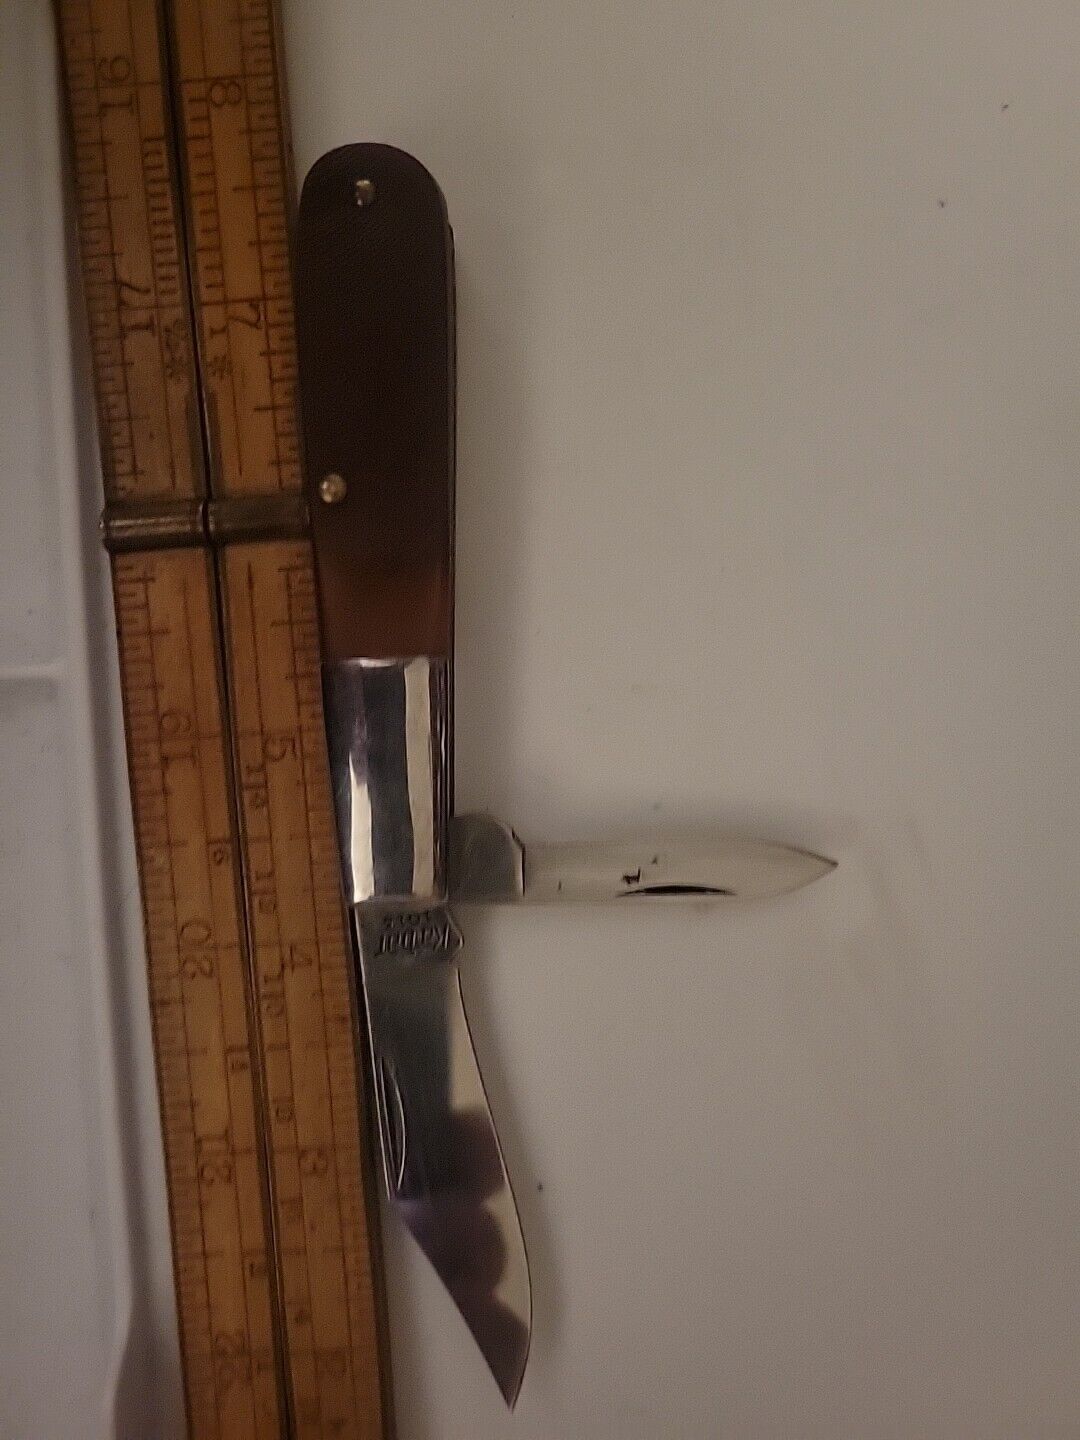  KA-BAR Vintage  SAWCUT DELRIN BARLOW KNIFE 1013 NICE 